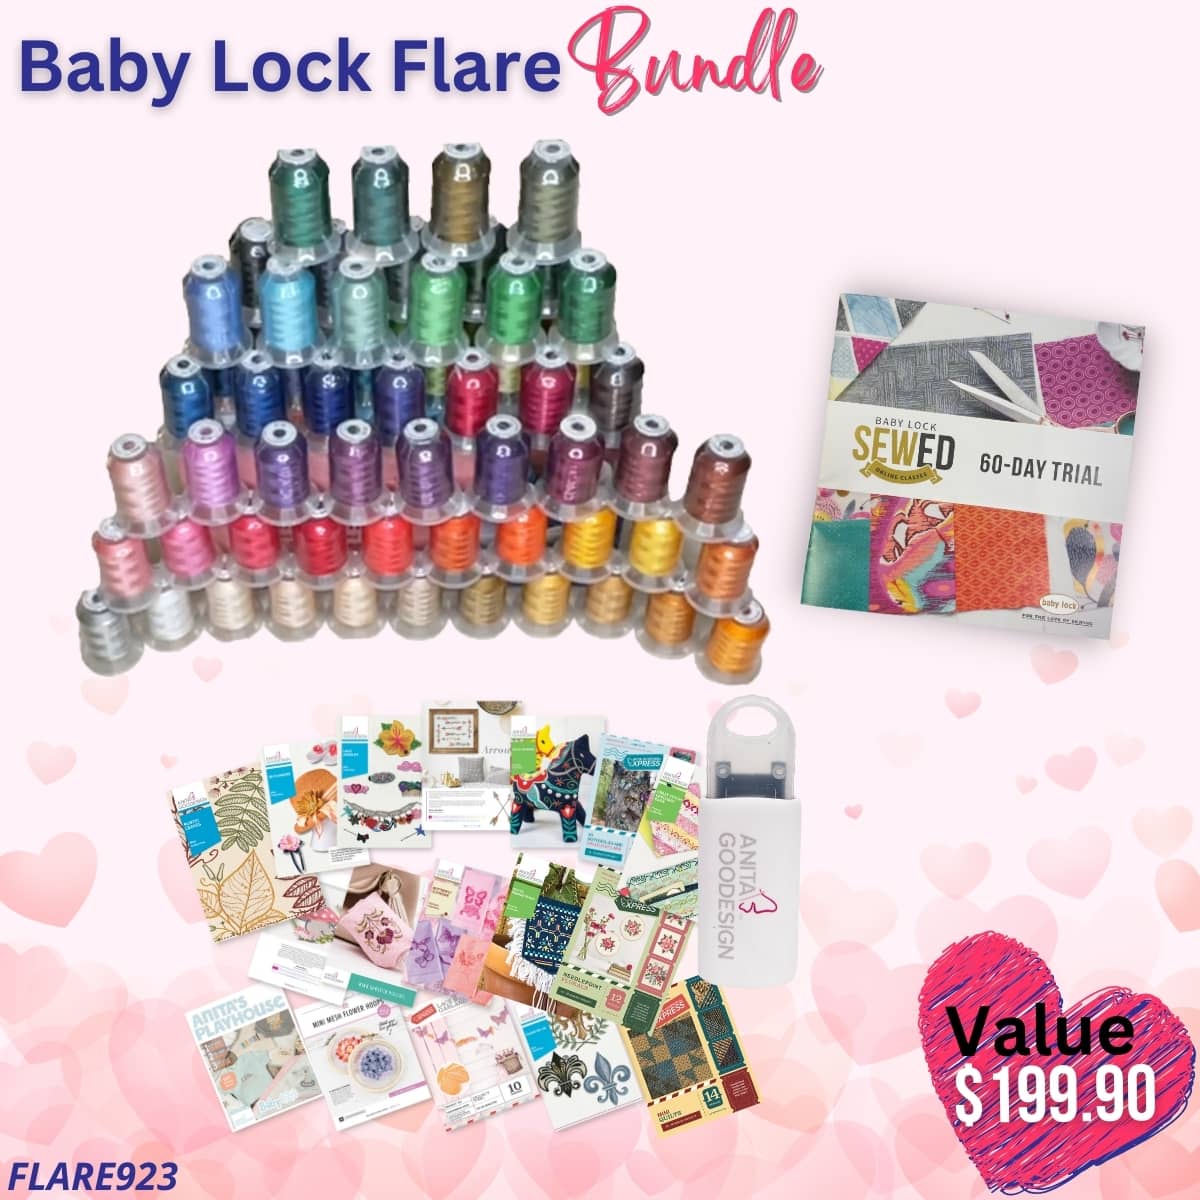 Baby Lock Flare bundle for Valentine's Sale